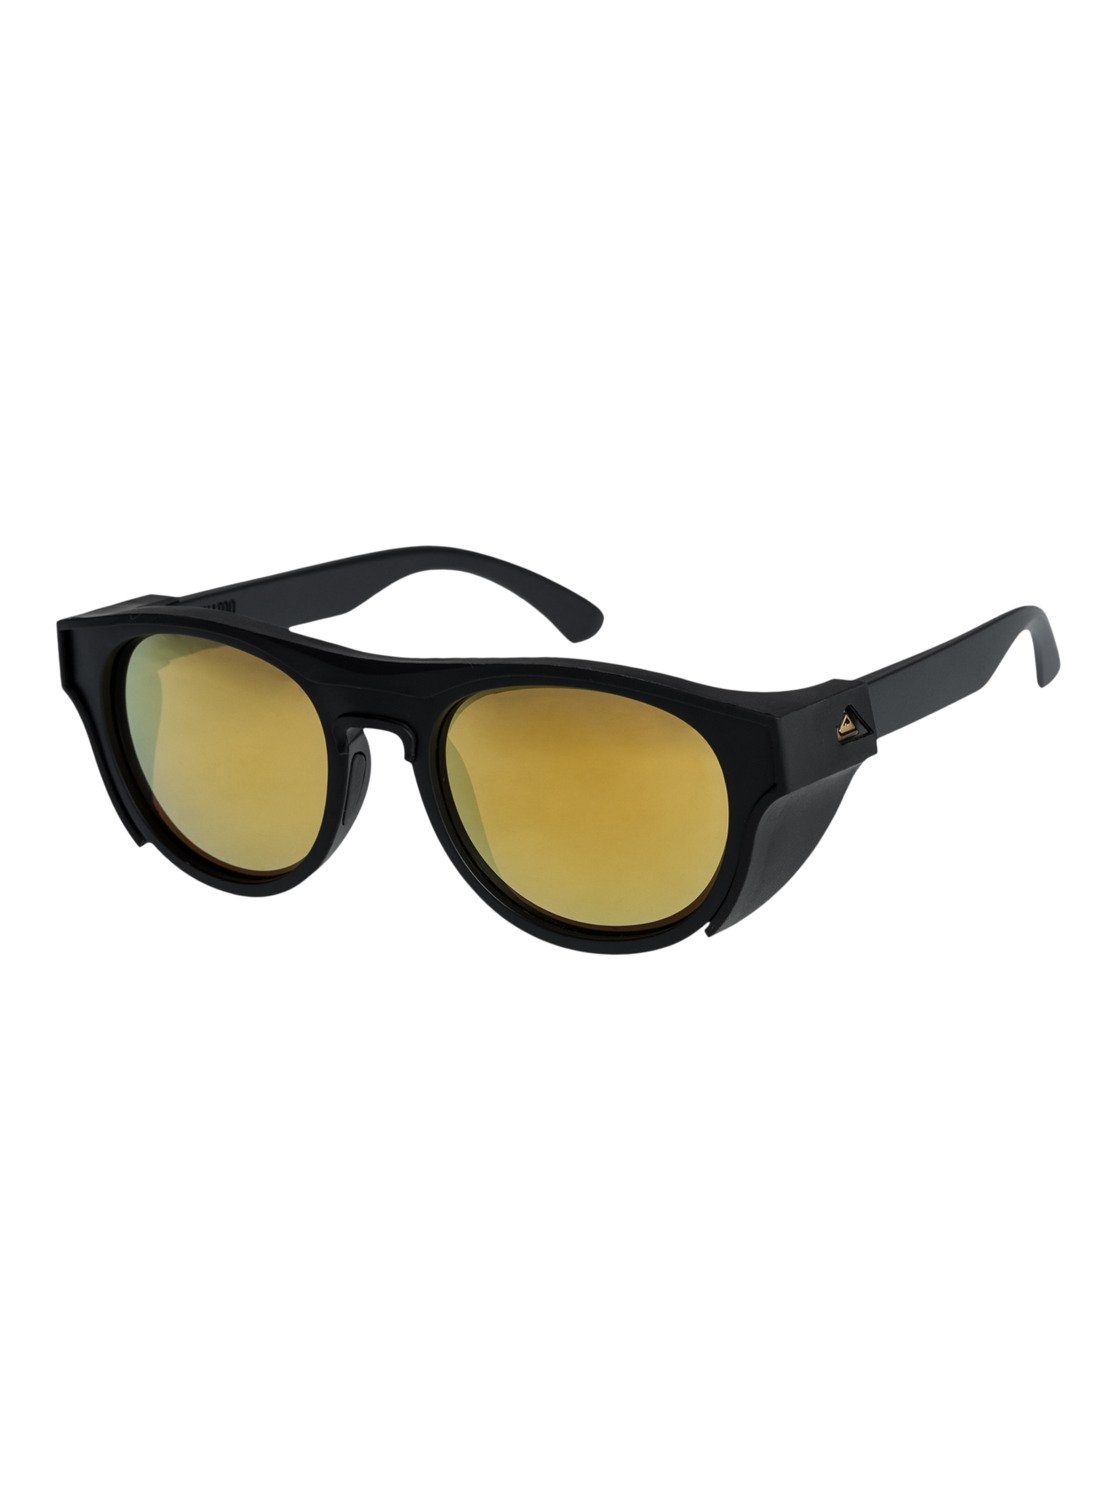 Quiksilver Sonnenbrille Eliminator+, Spritzgegossener Rahmen aus